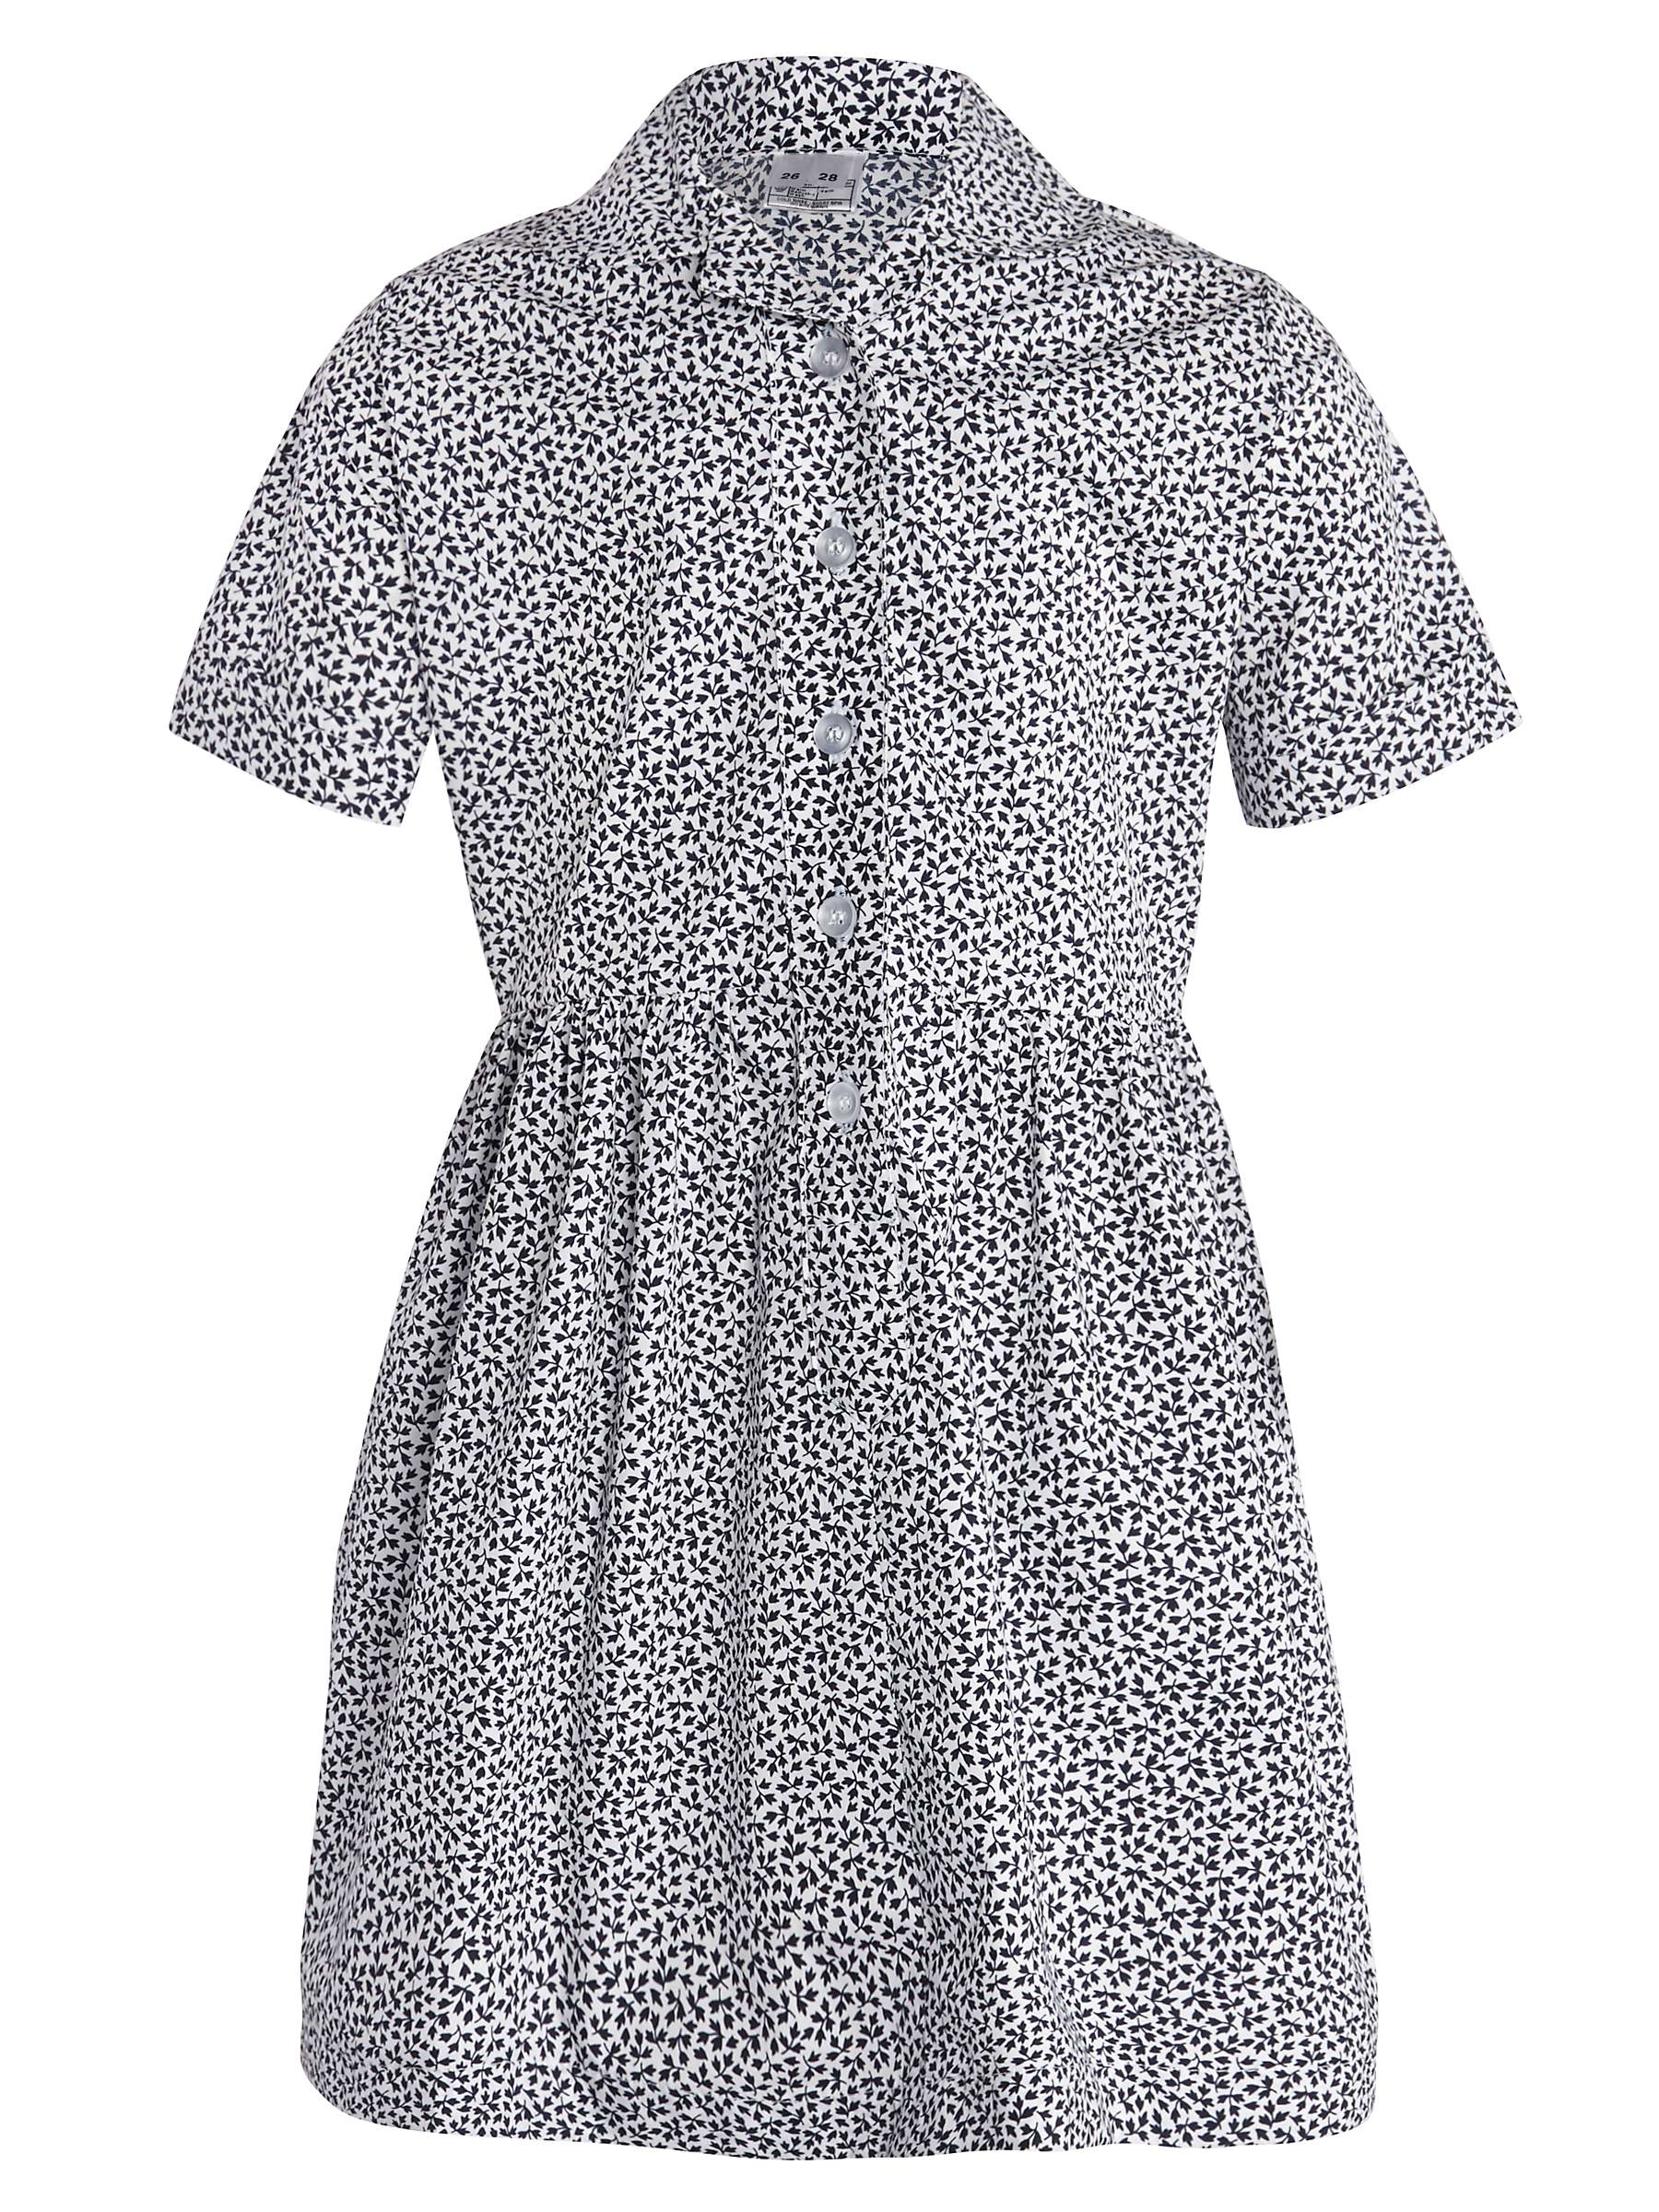 Buy Winchester House School Girls' Summer Dress, Navy Online at johnlewis.com